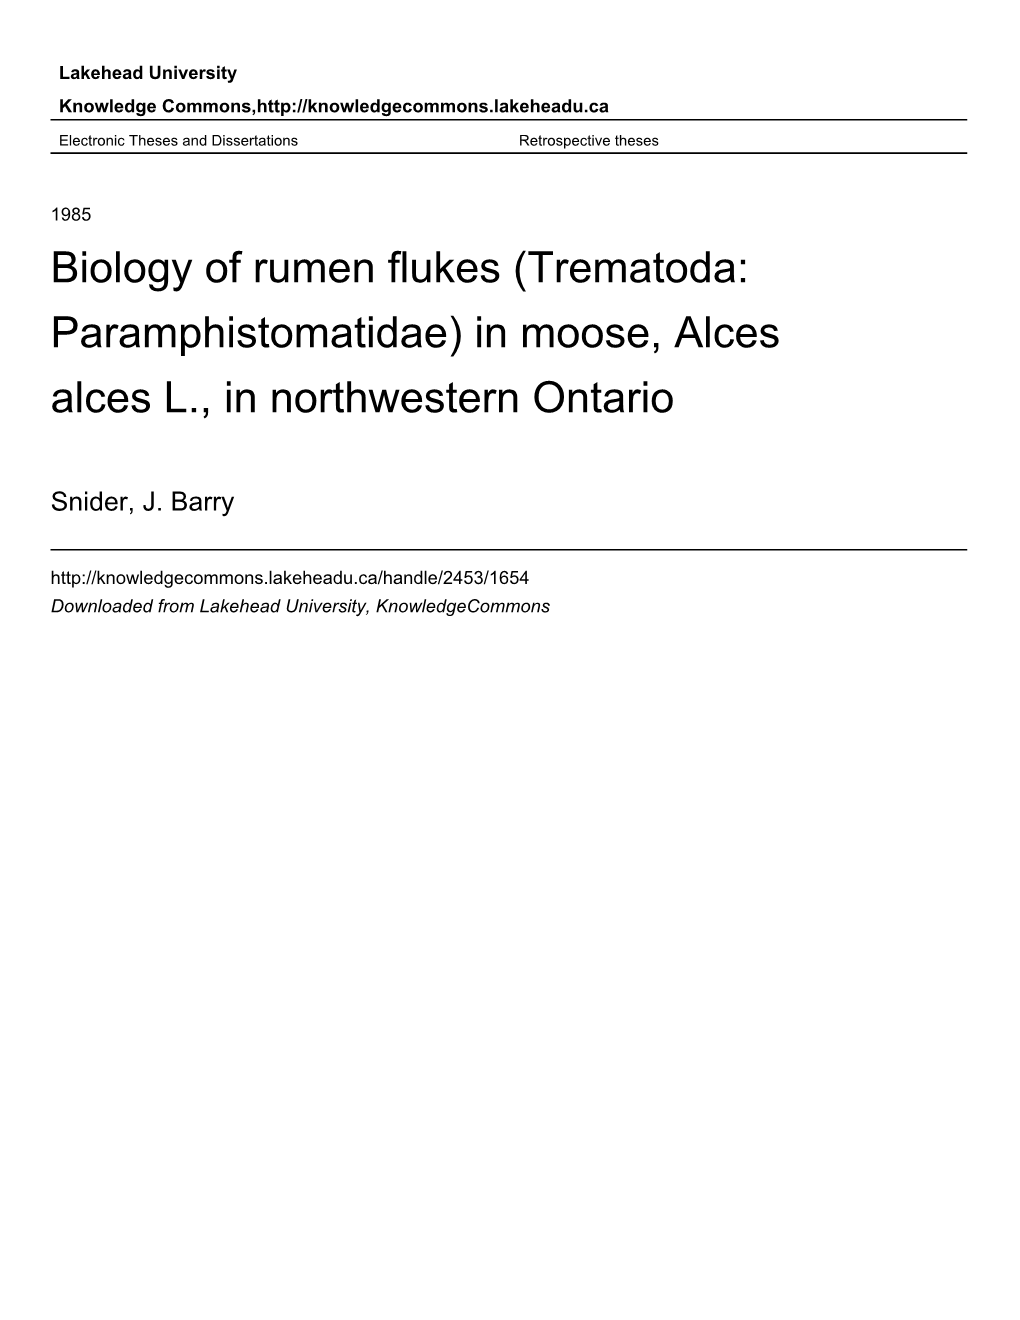 Biology of Rumen Flukes (Trematoda: Paramphistomatidae) in Moose, Alces Alces L., in Northwestern Ontario